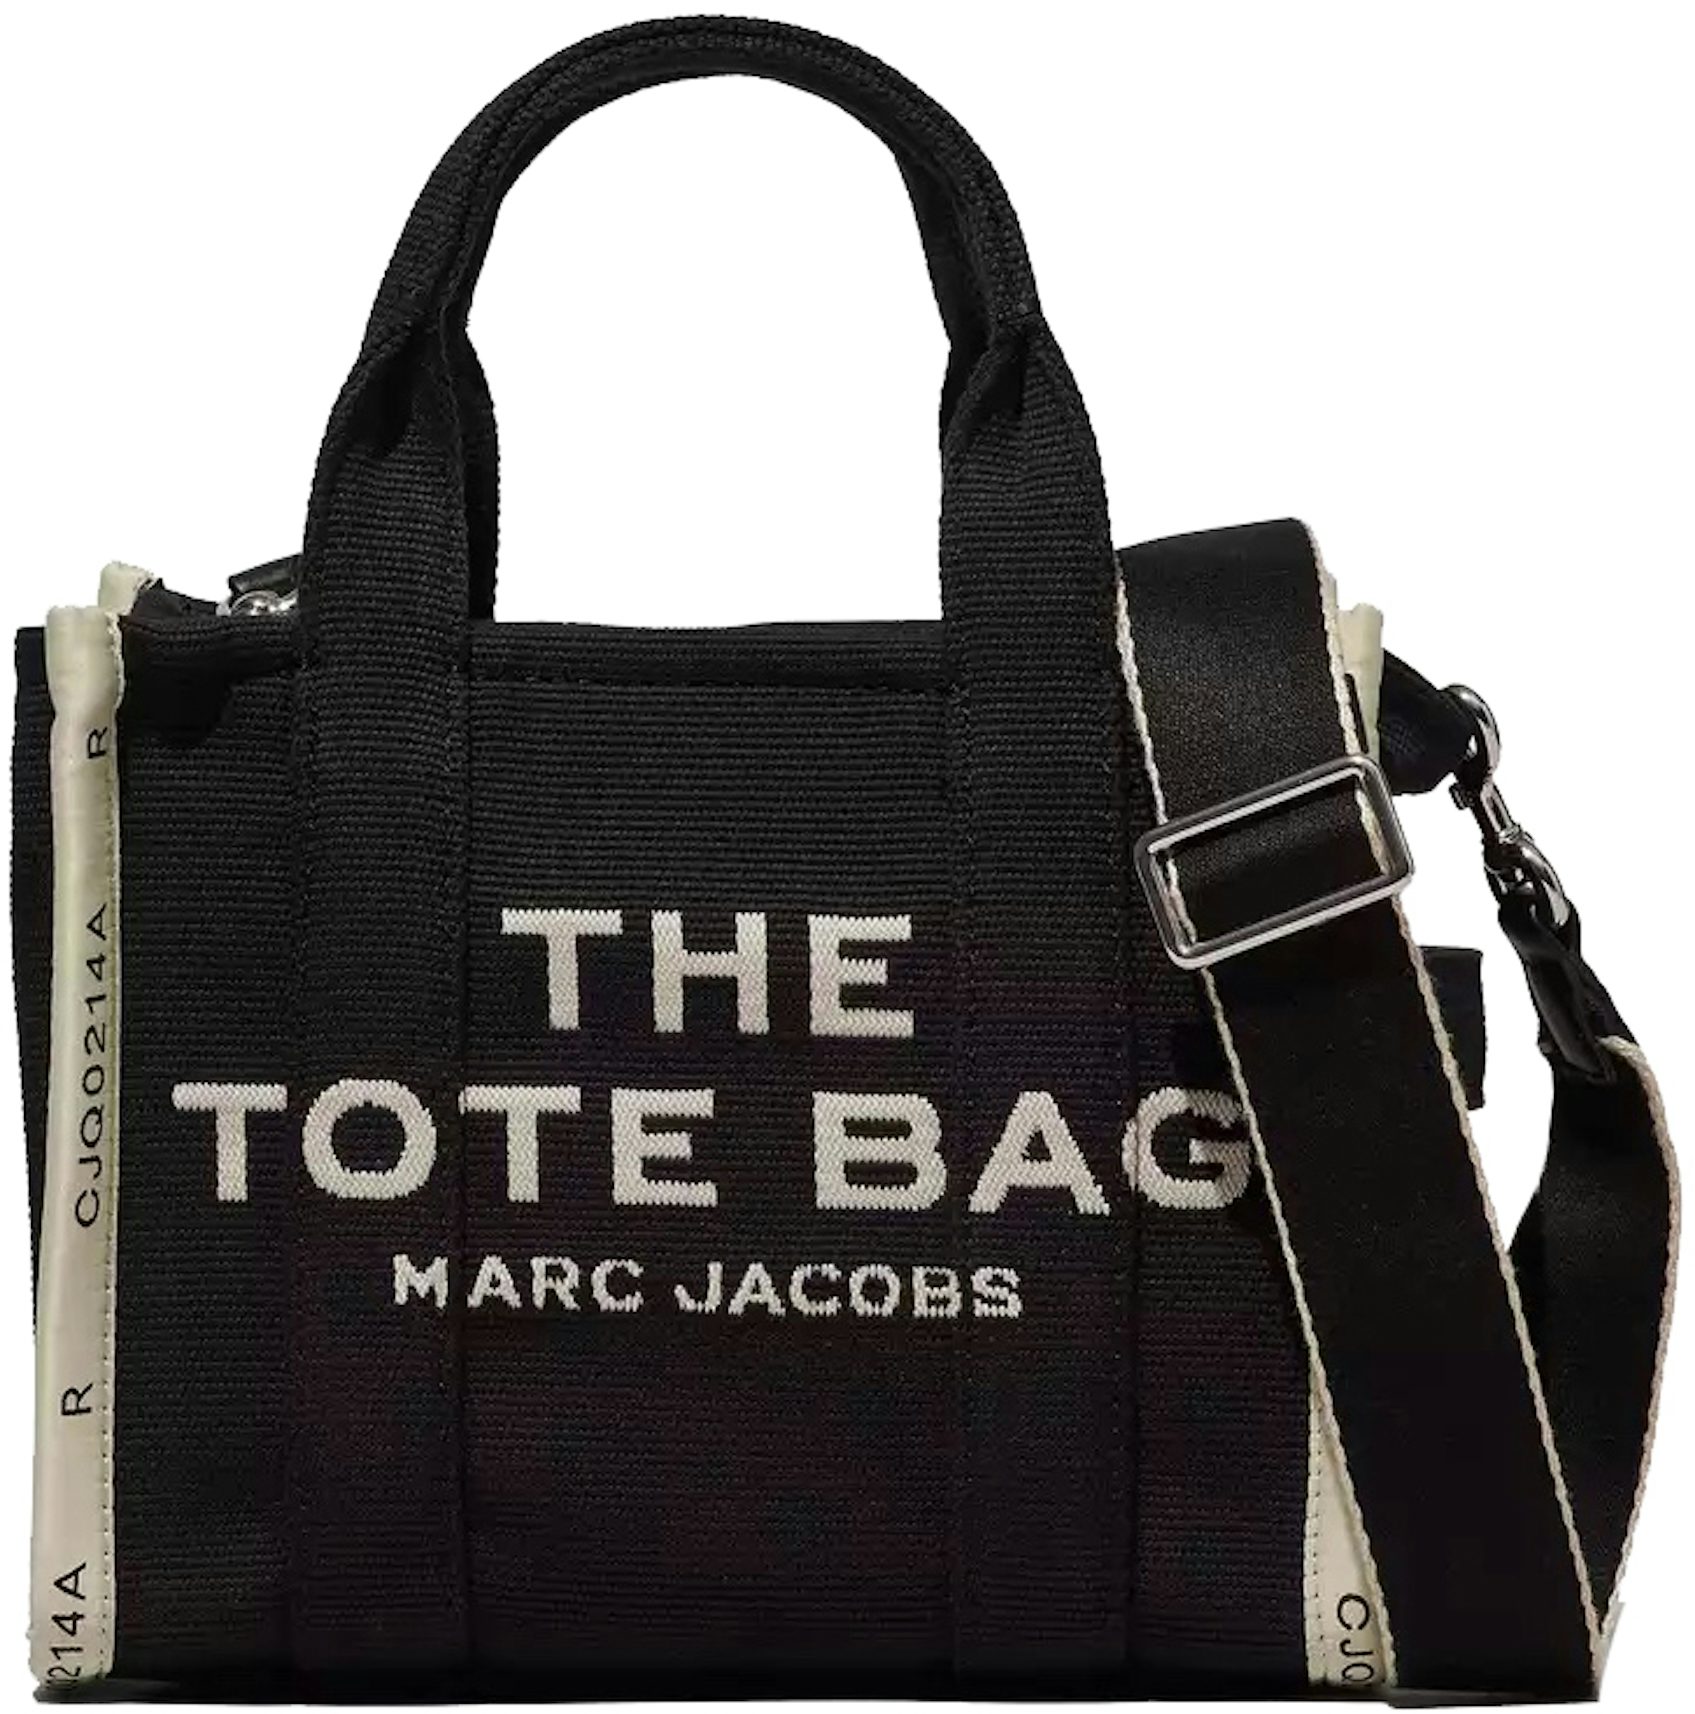 all black marc jacobs bag